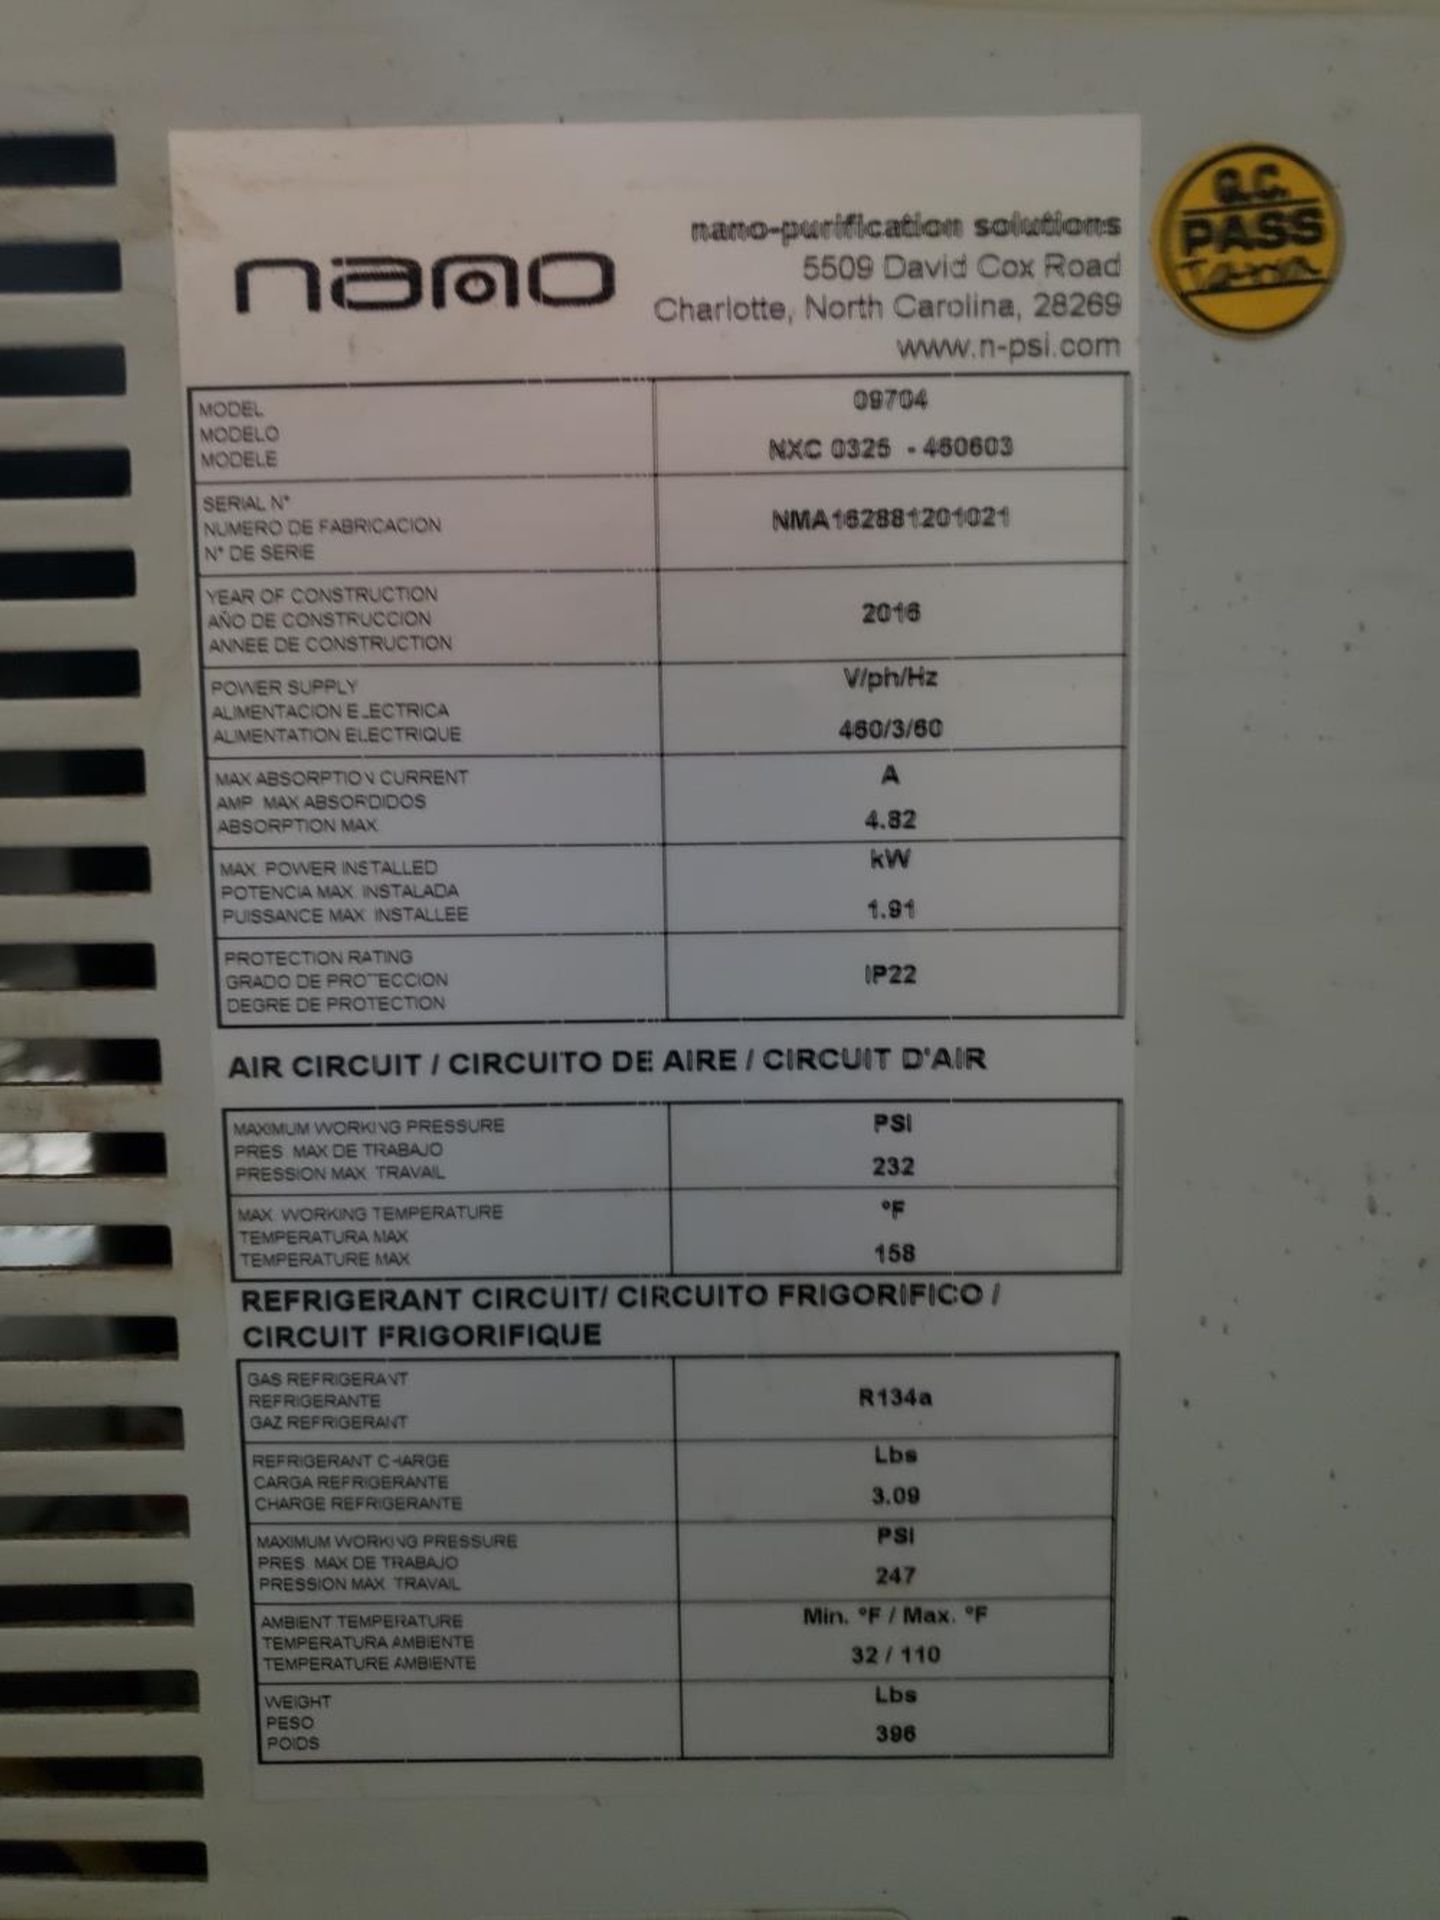 2016 Nano Air Dryer, M# 09704, S/N NMA 162881201021 | Rig Fee: $200 - Image 2 of 2